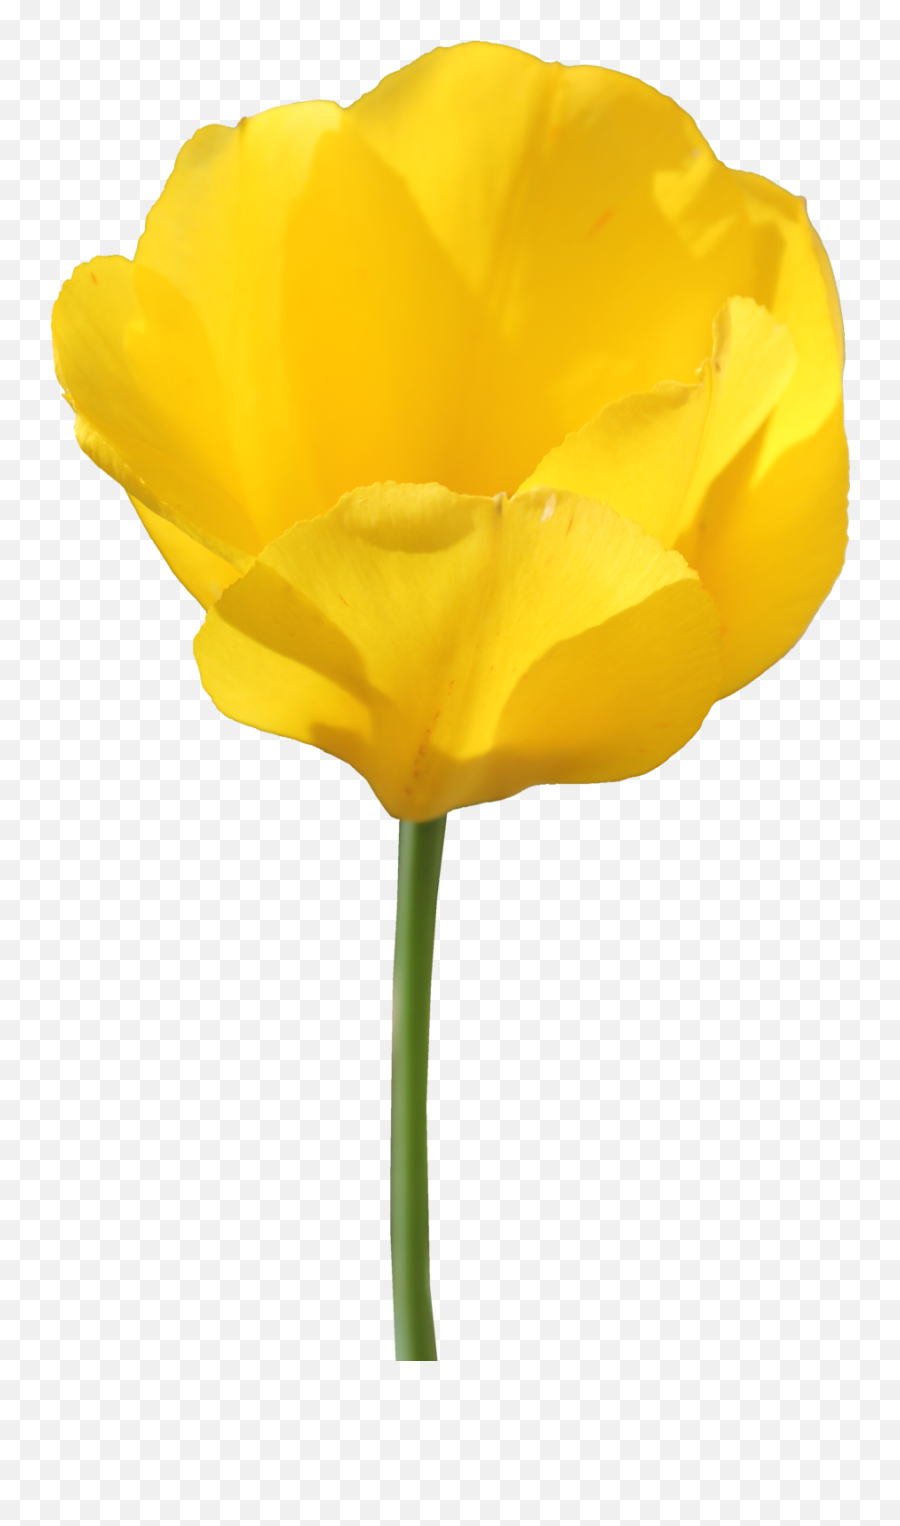 Tulip Clipart Yellow Tulip - Yellow Tulip No Background Tulip With Transparent Background Emoji,Tulip Clipart